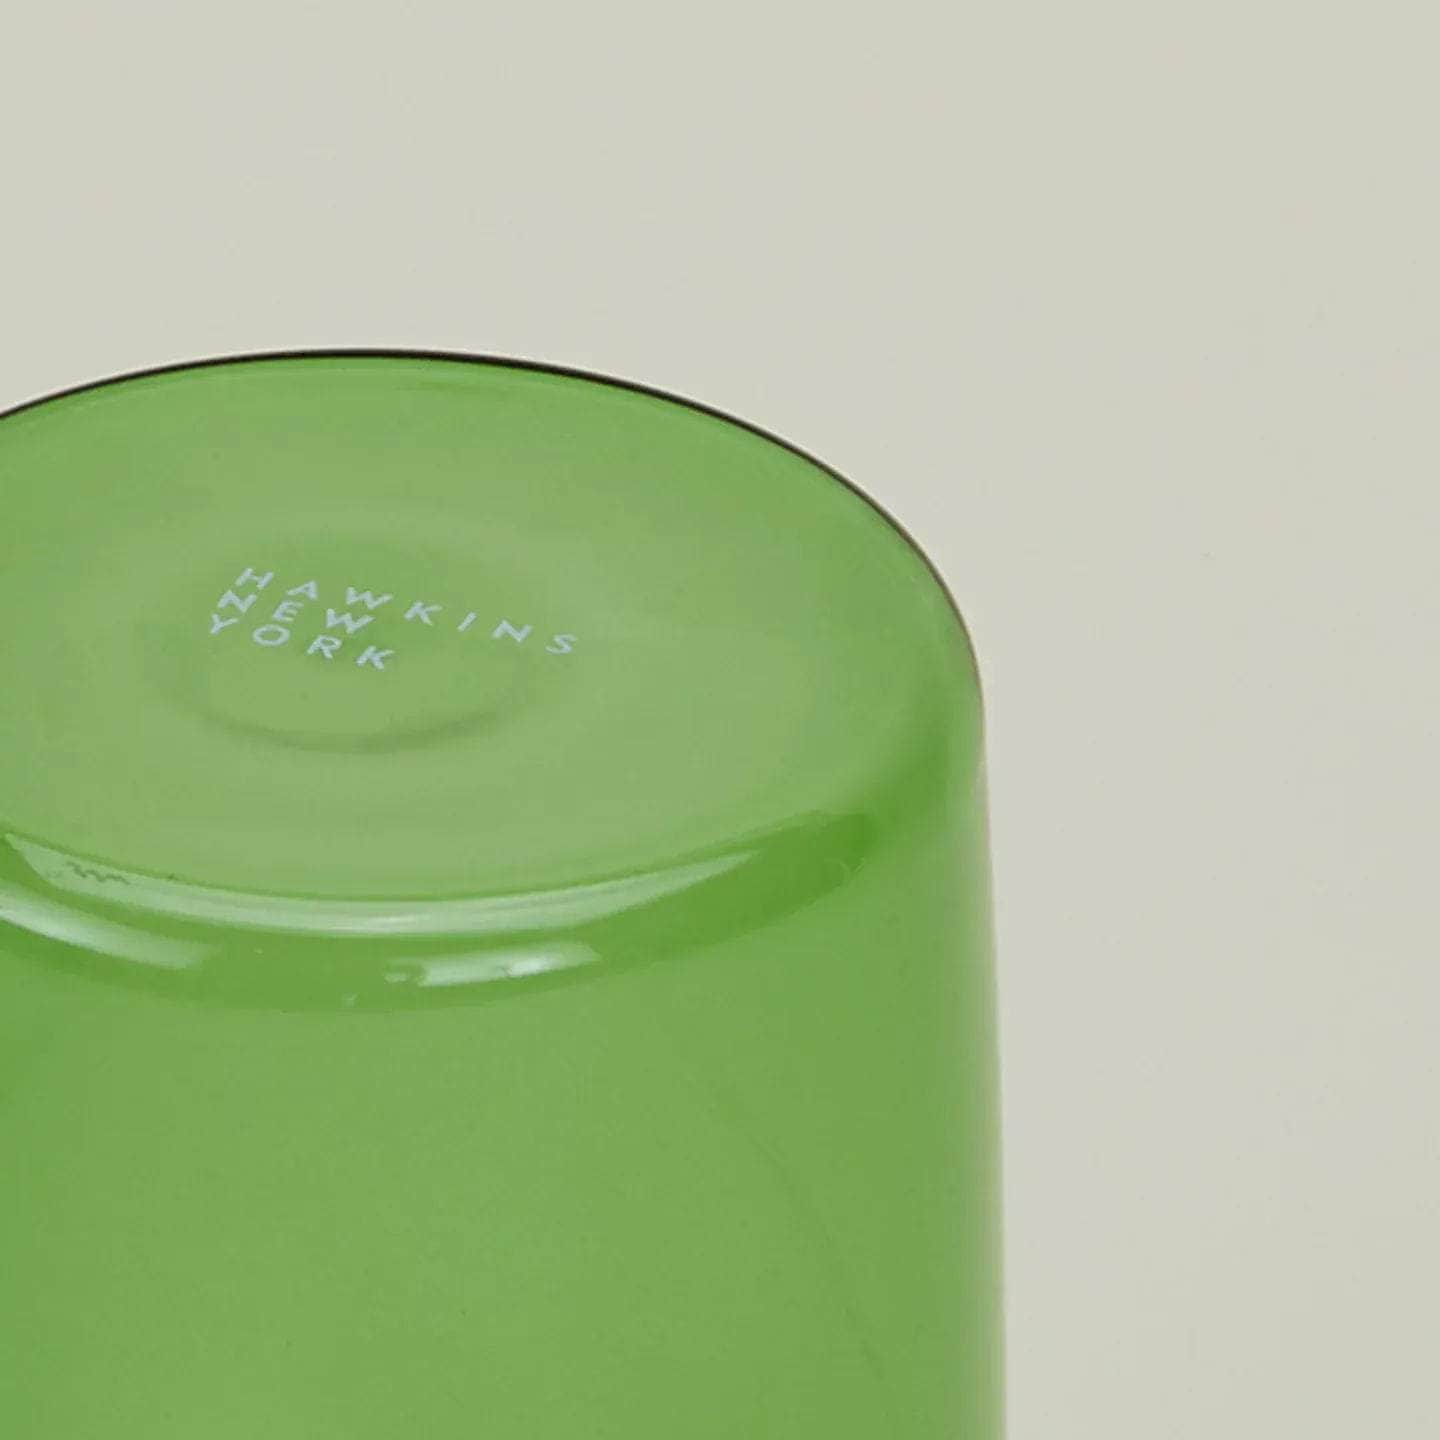 Essential Glassware - Set Of 4, Green